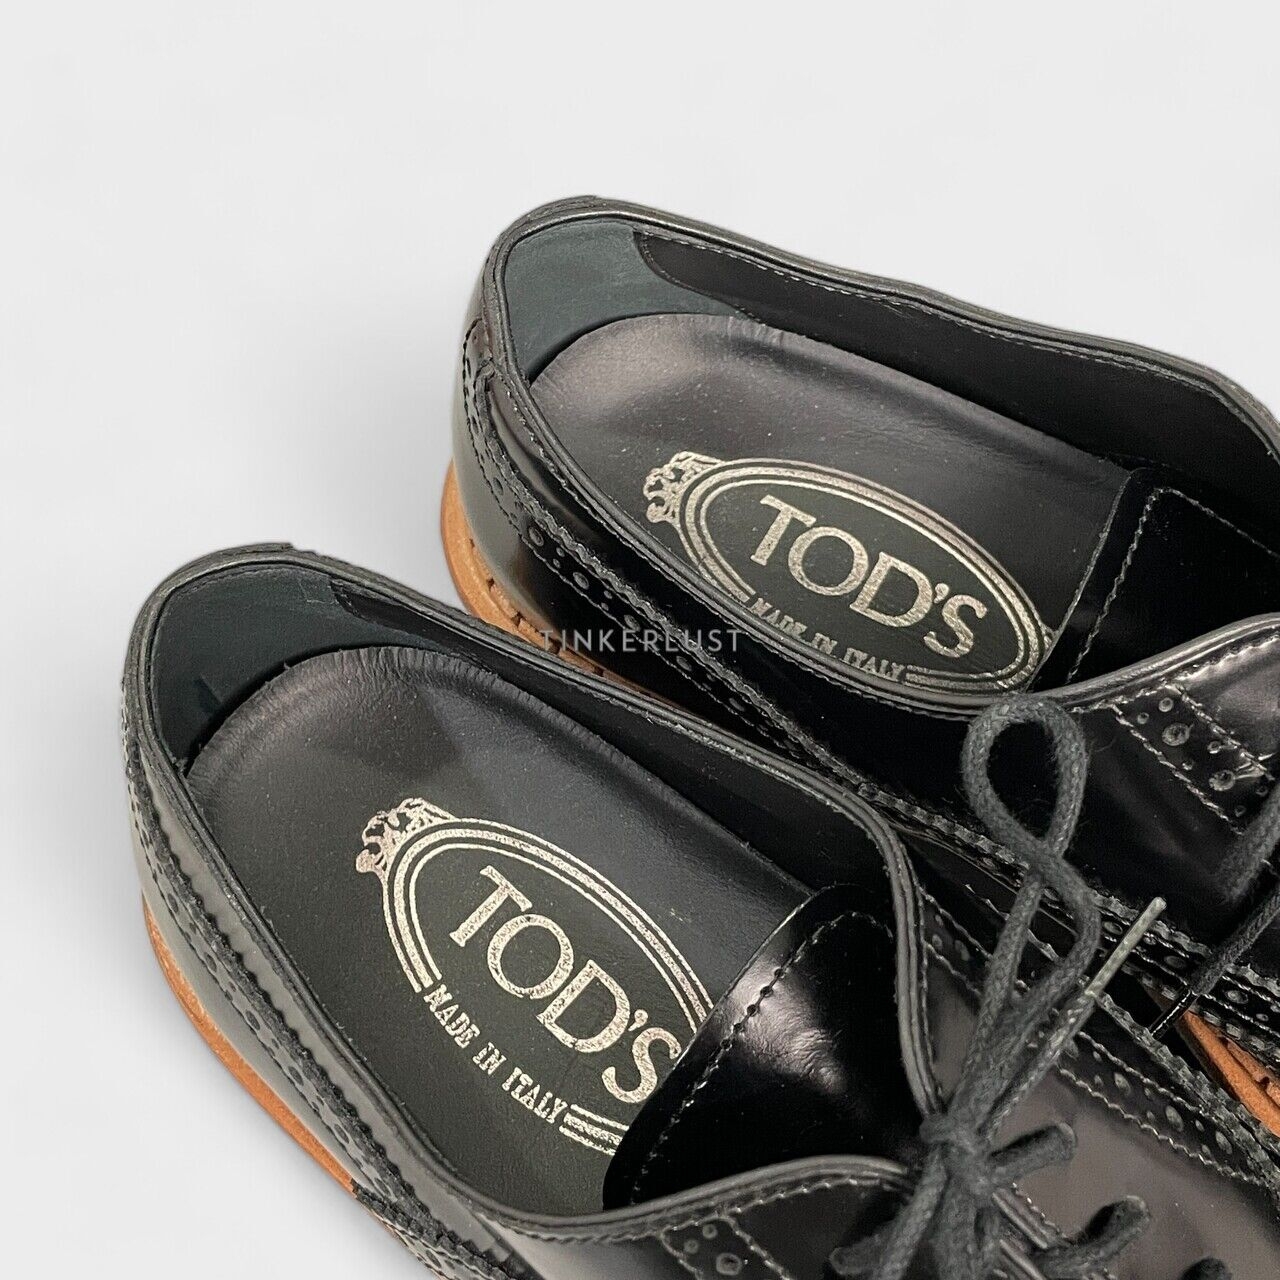 Tod's Leather Platform Black Oxford Shoes 